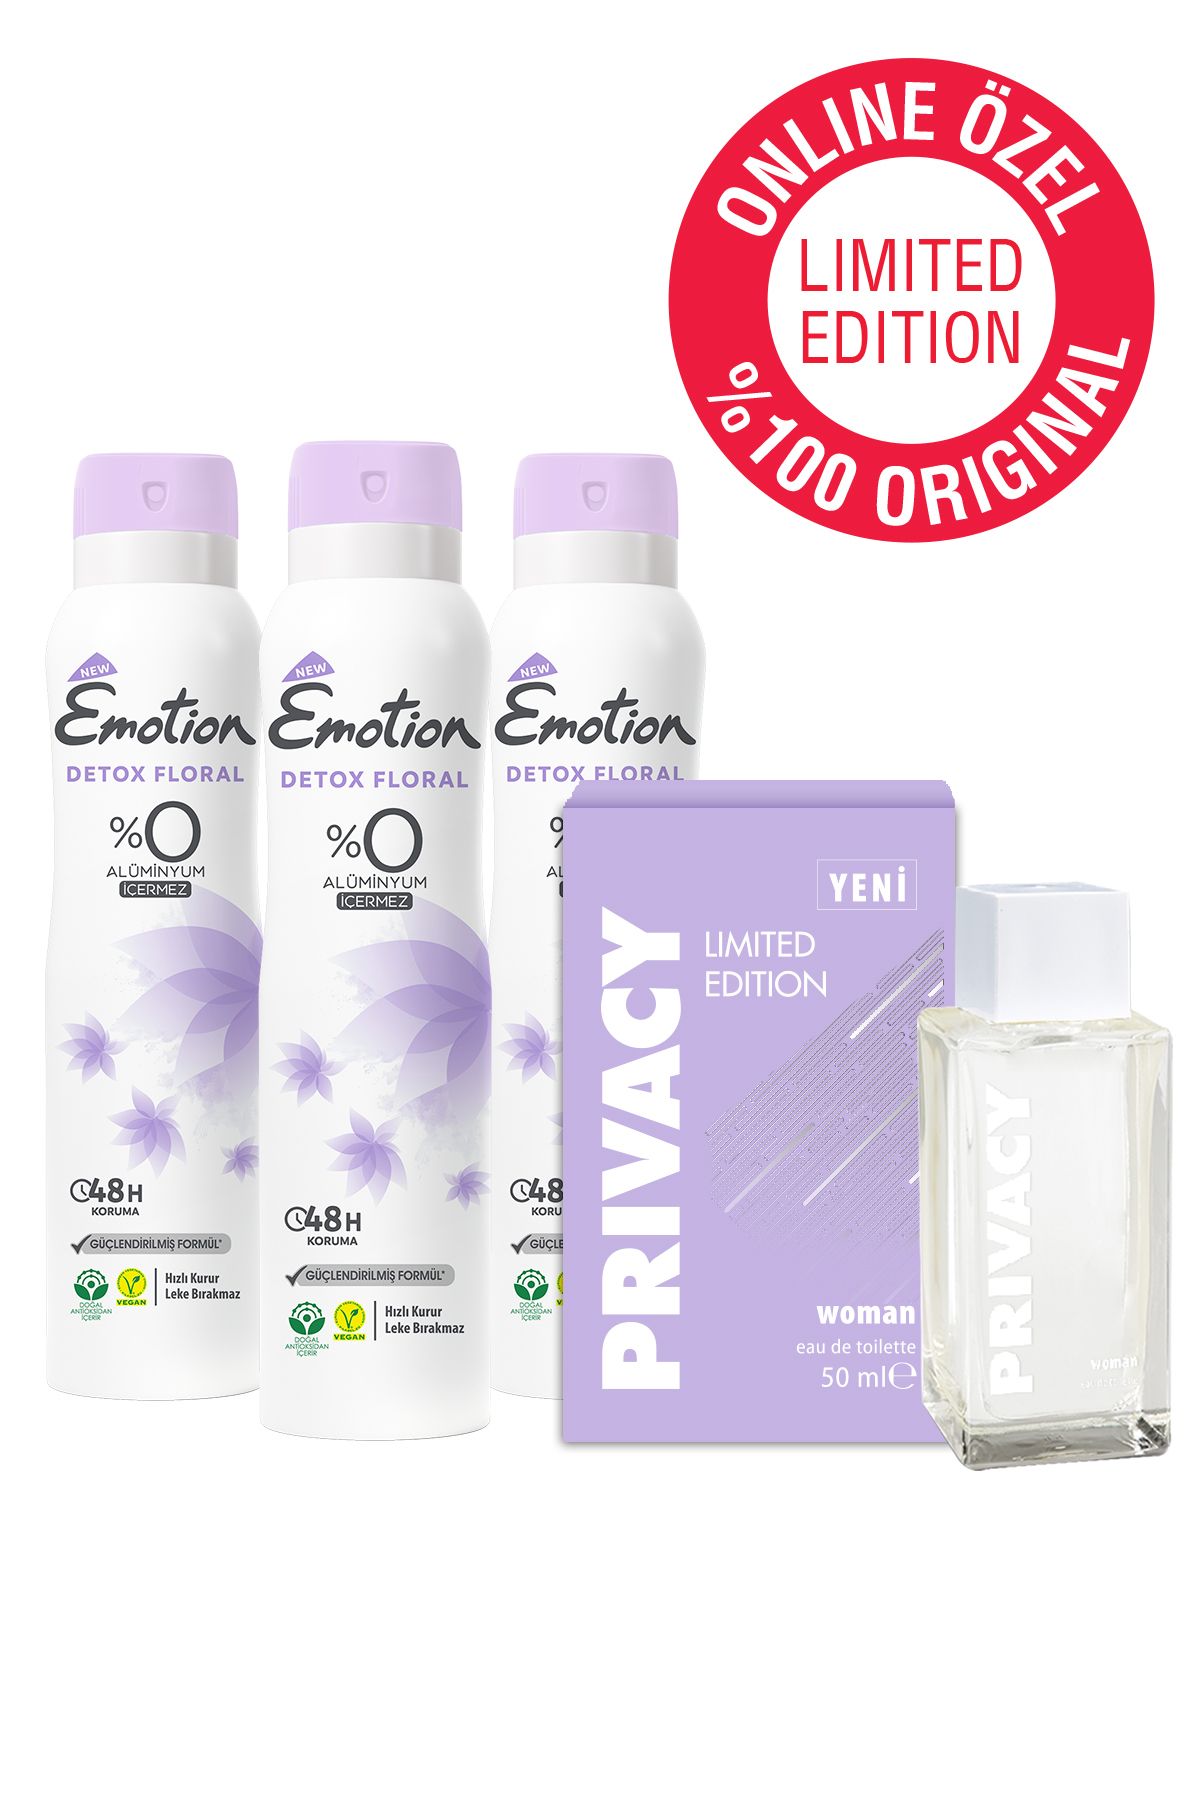 Privacy Women Limited Edition Edt Parfüm 50ml Online Özel & Emotion Detox Floral Dedodorant 3x150ml